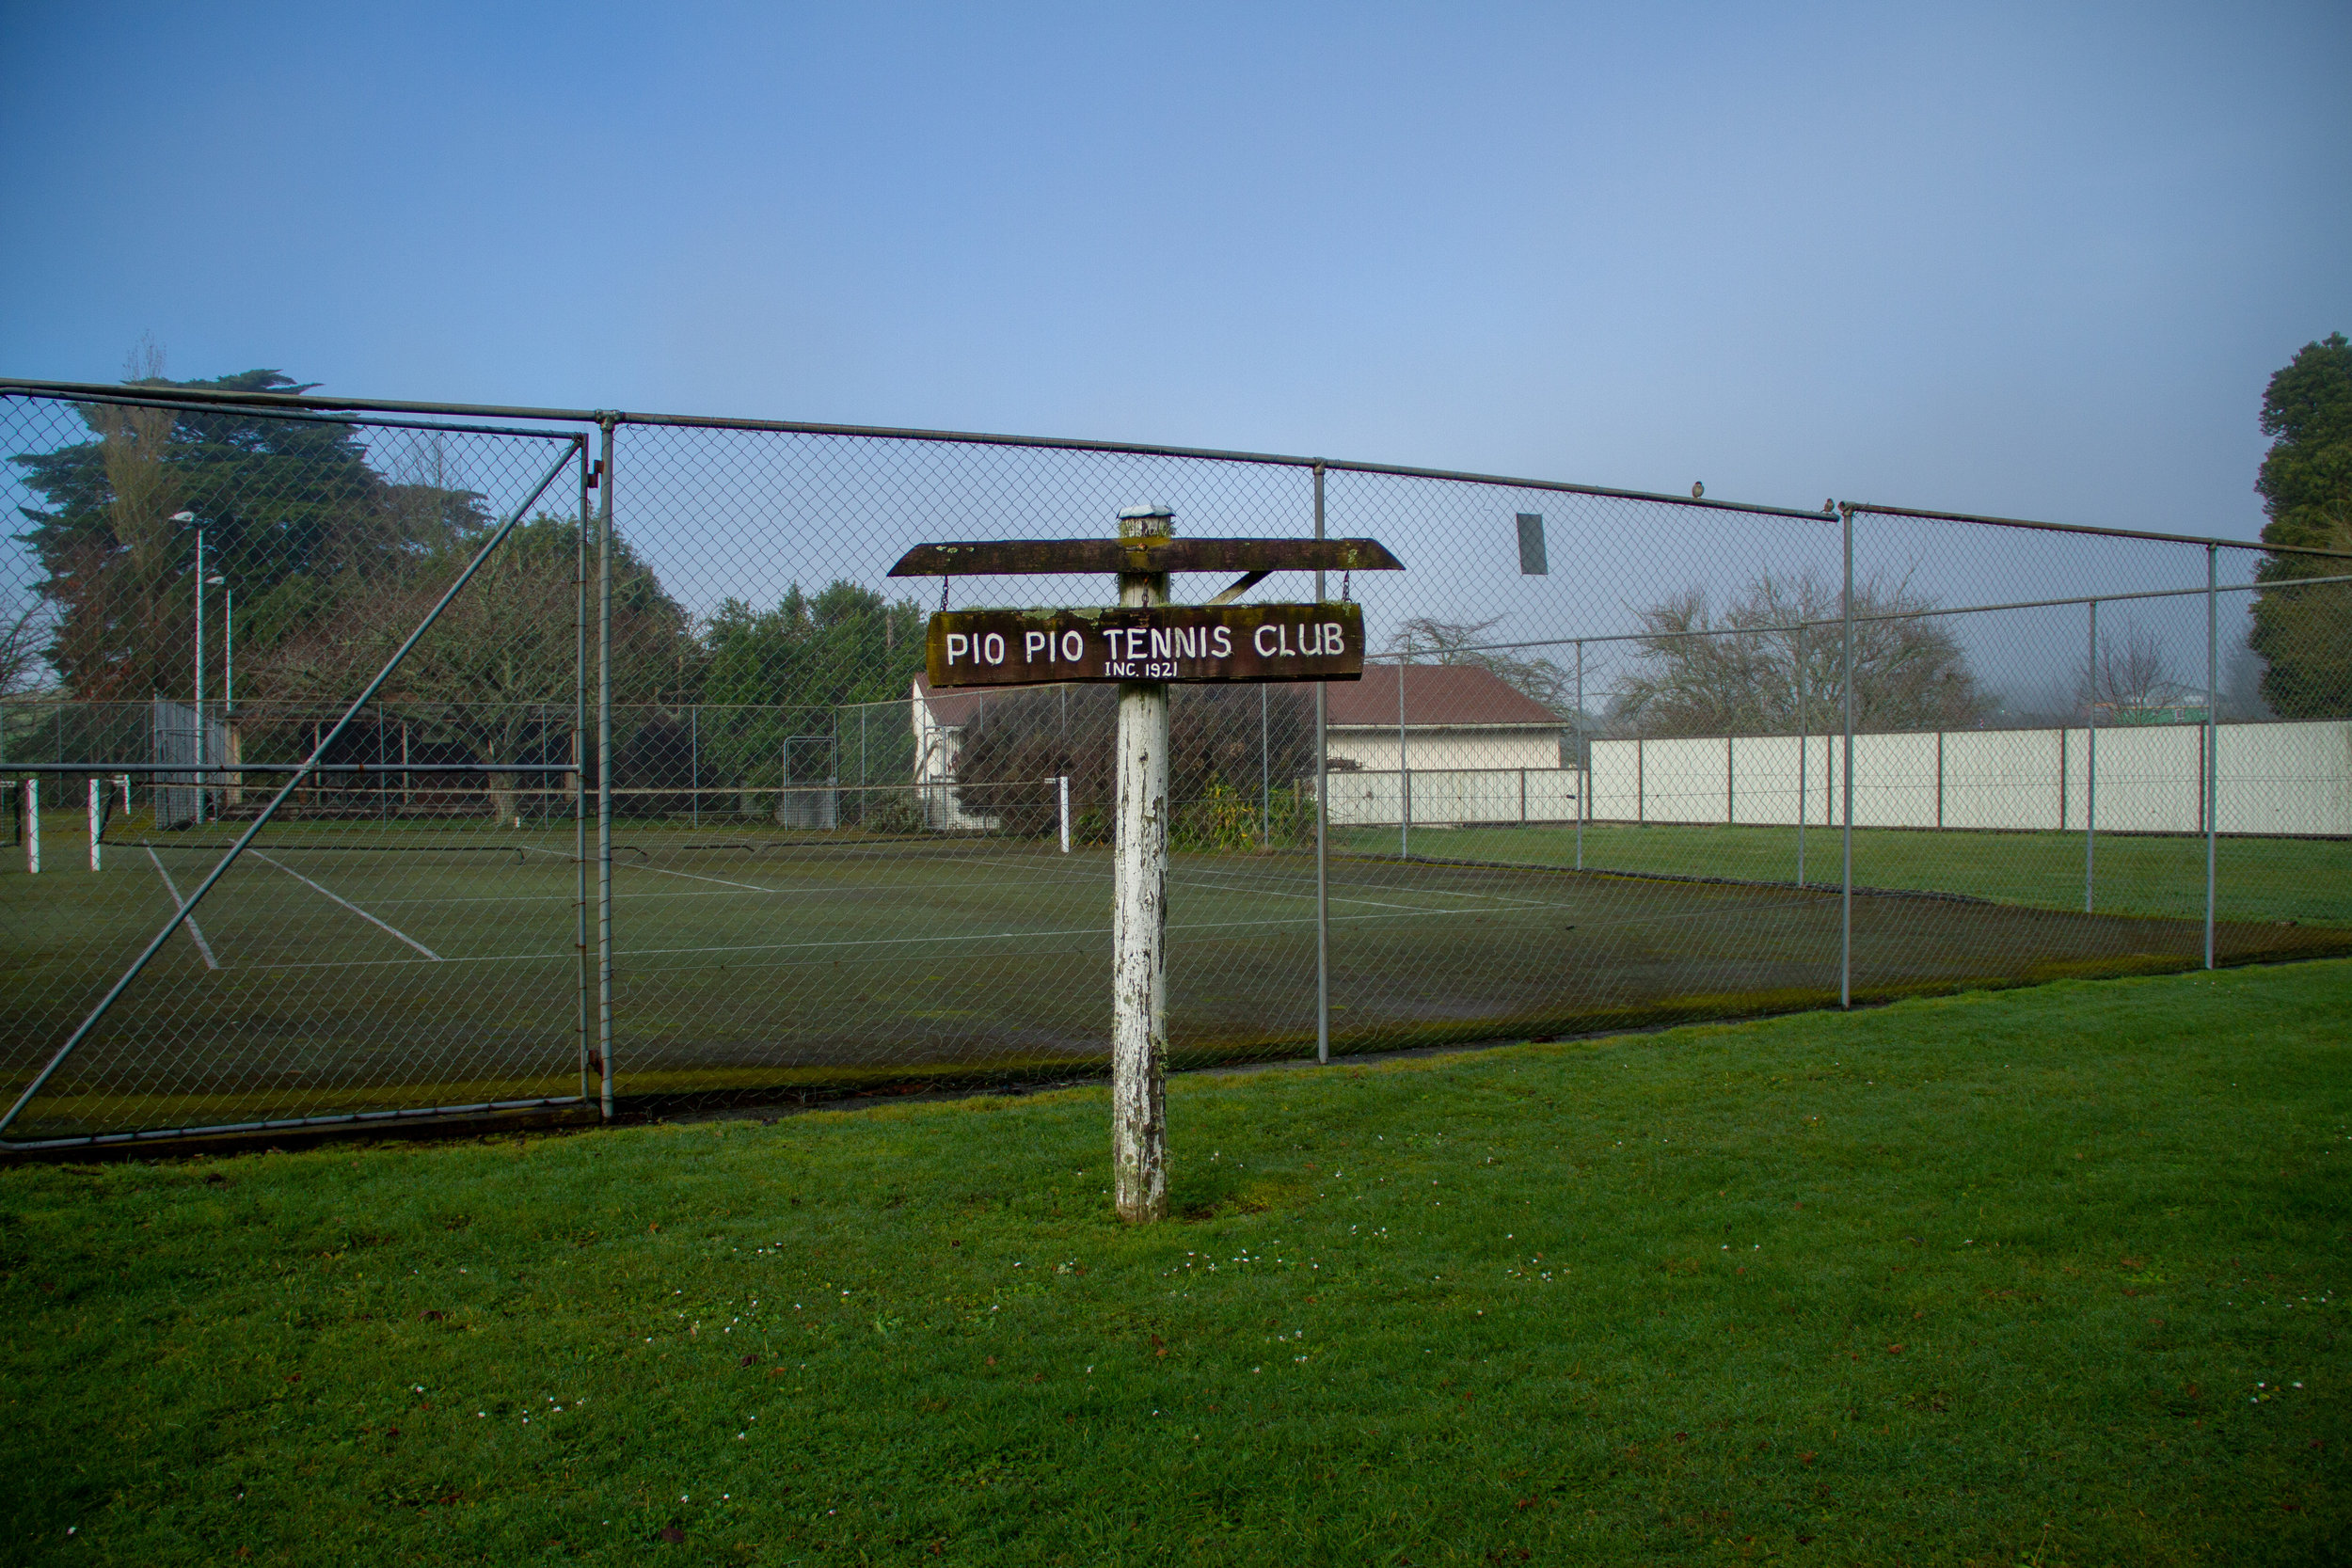 Pio Pio Tennis Club, 2018